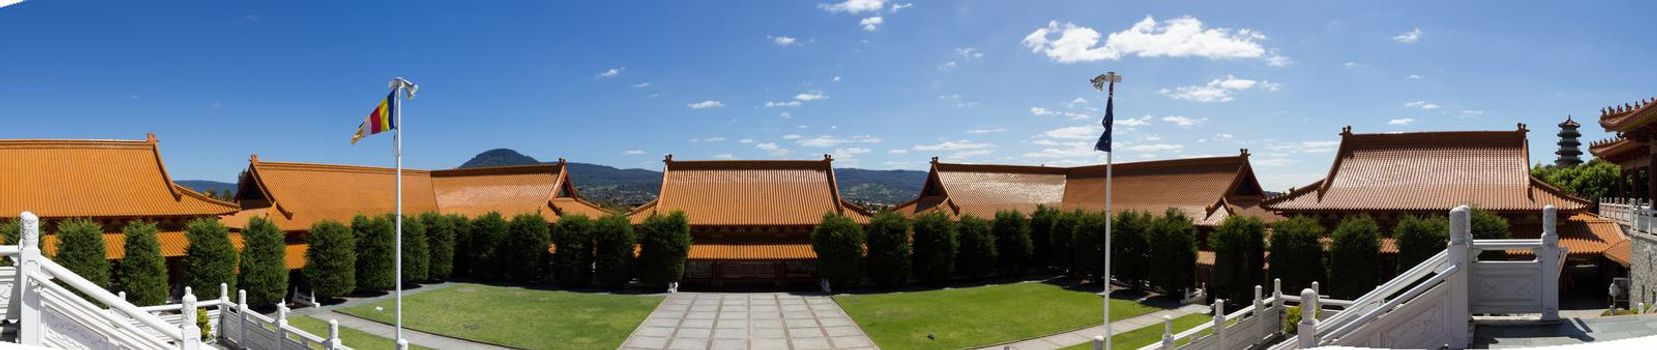 Nan Tien Temple Buddha religion in Australia, New South Wales